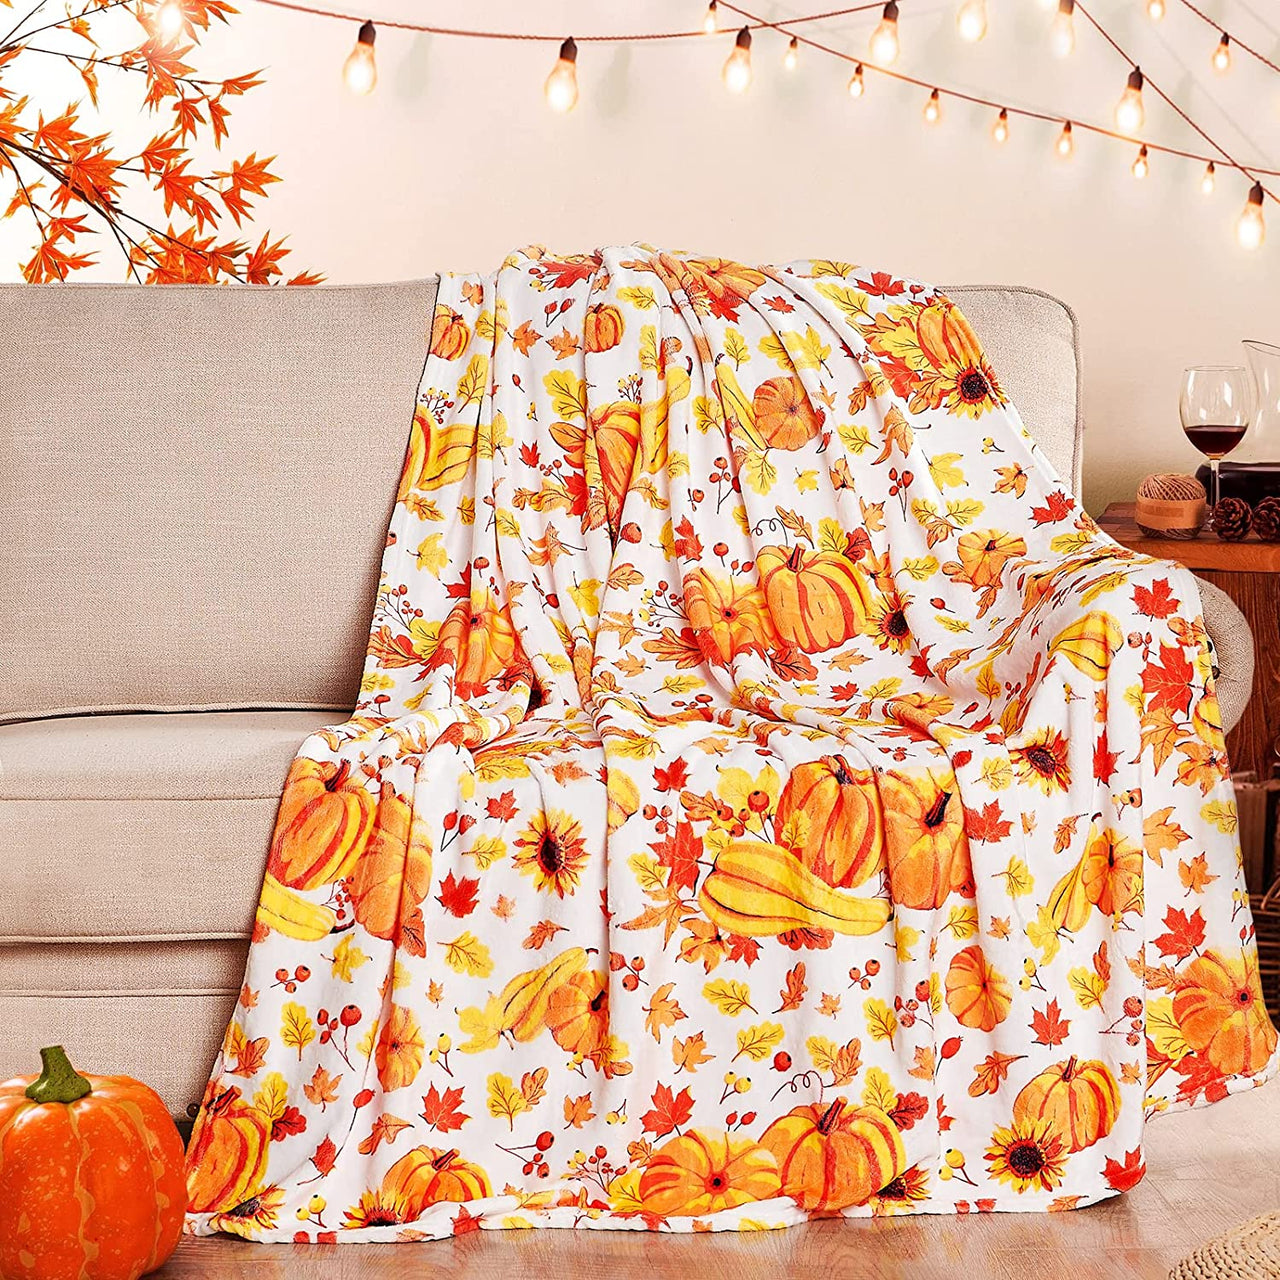 Dog Heaven™ Halloween Season Blankets